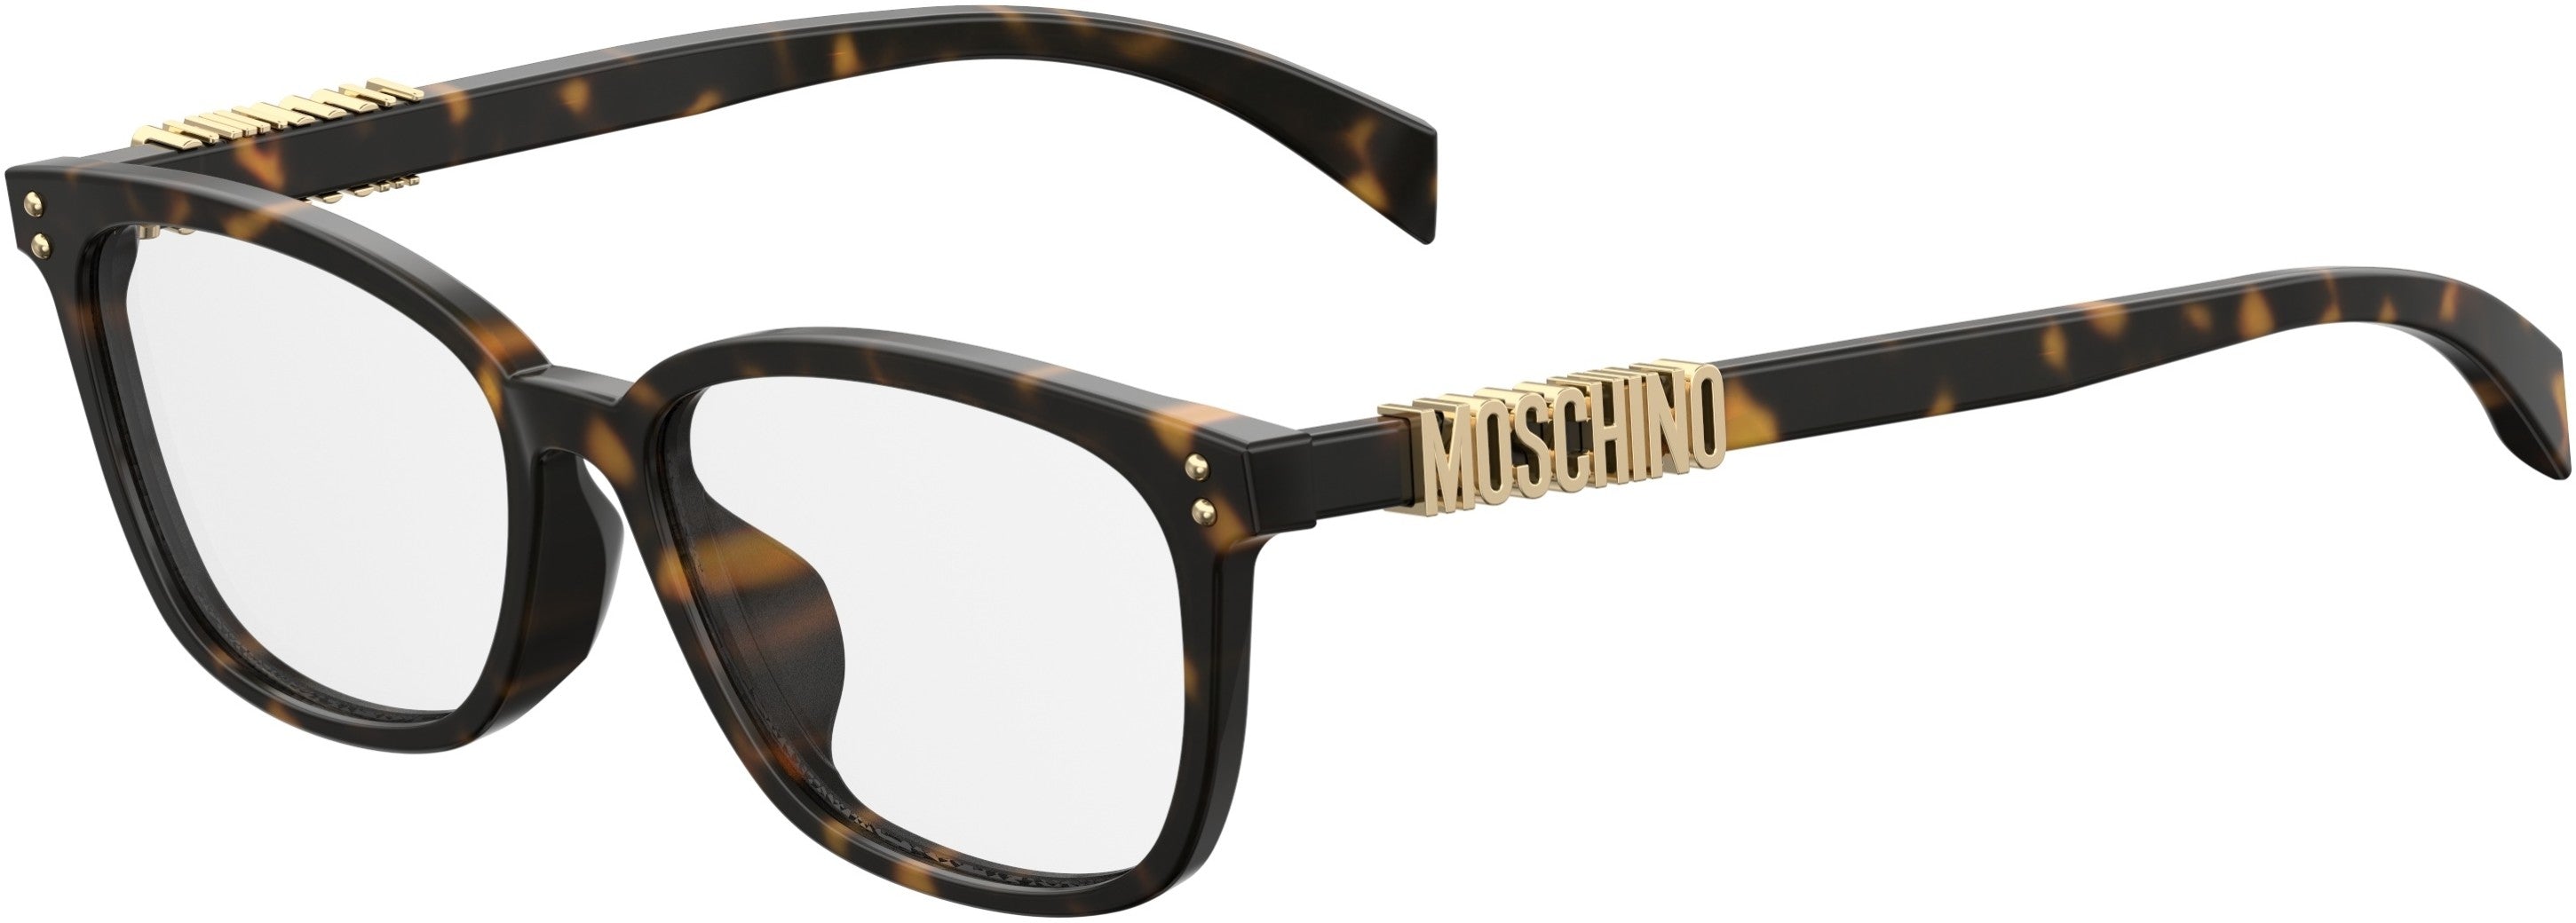  Moschino 515/F Rectangular Eyeglasses 0086-0086  Dark Havana (00 Demo Lens)